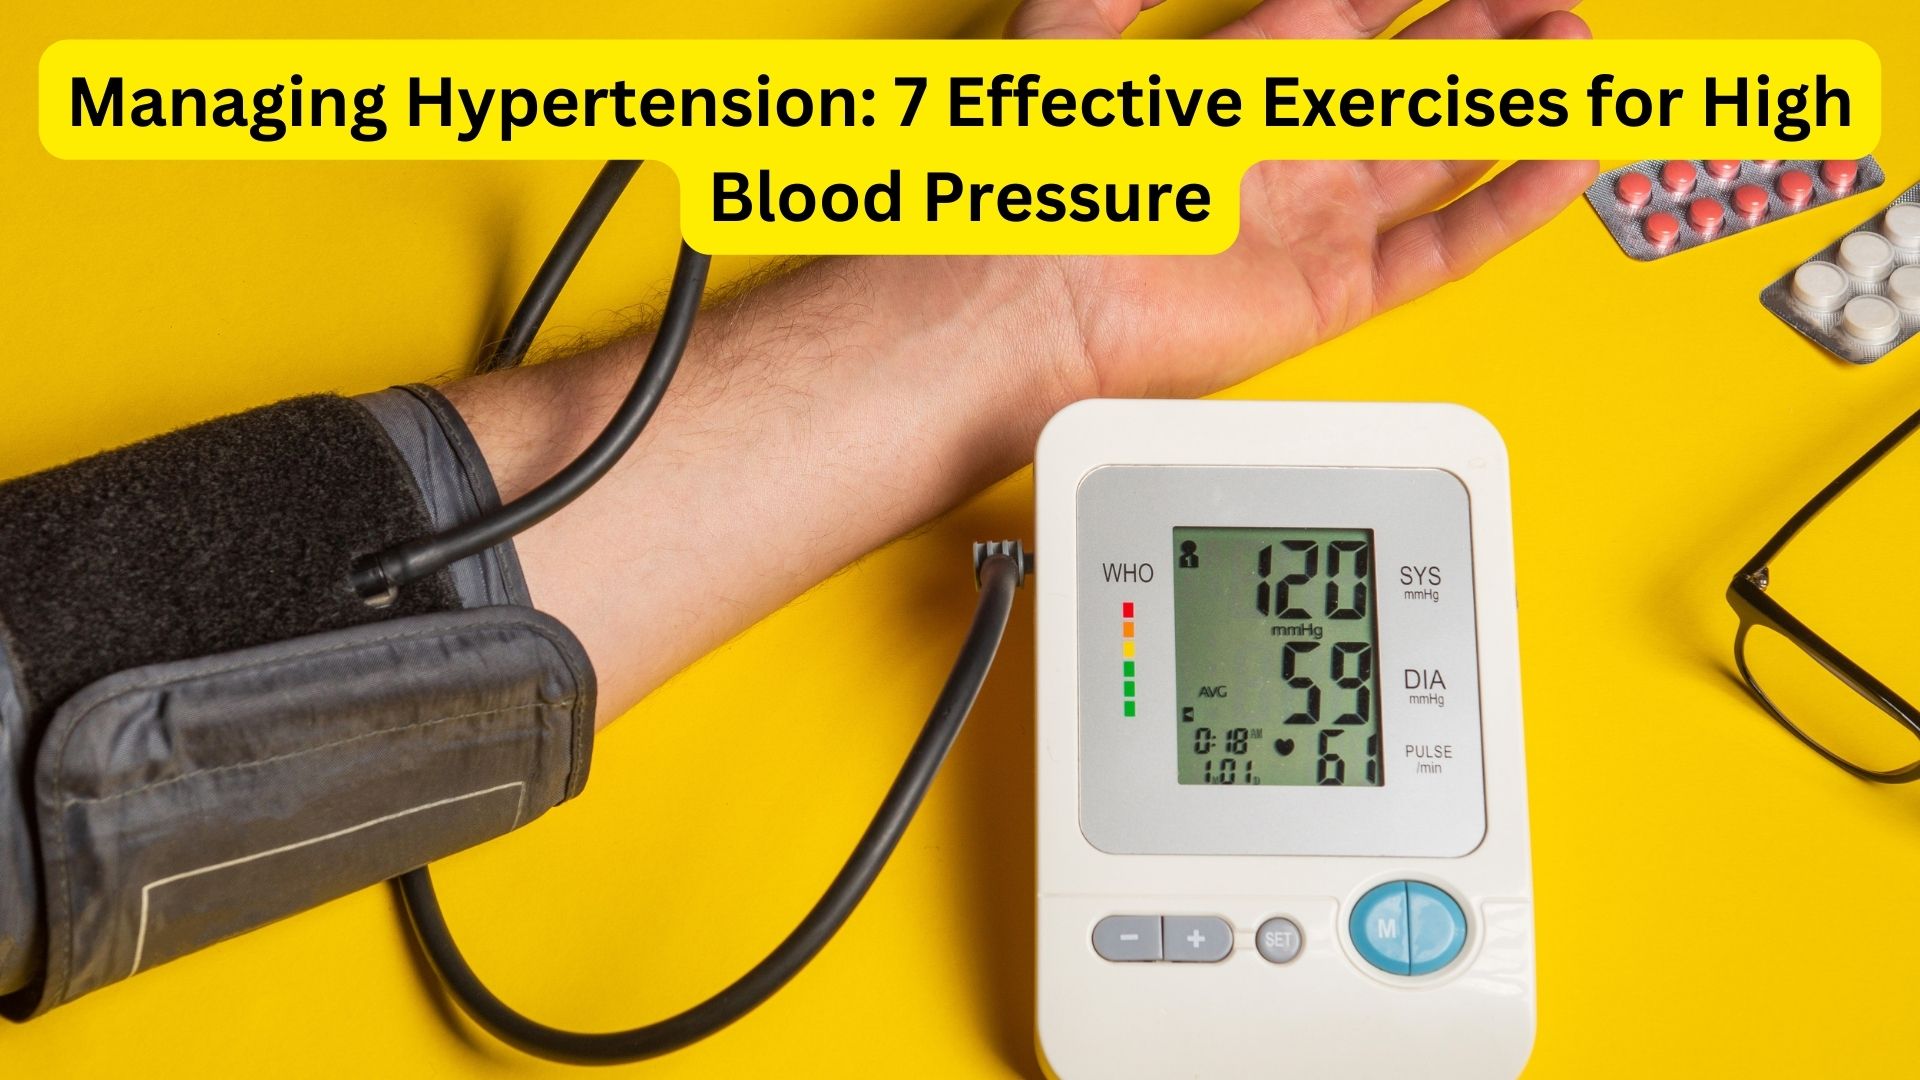 Managing Hypertension: 7 Effective Exercises for High Blood Pressure